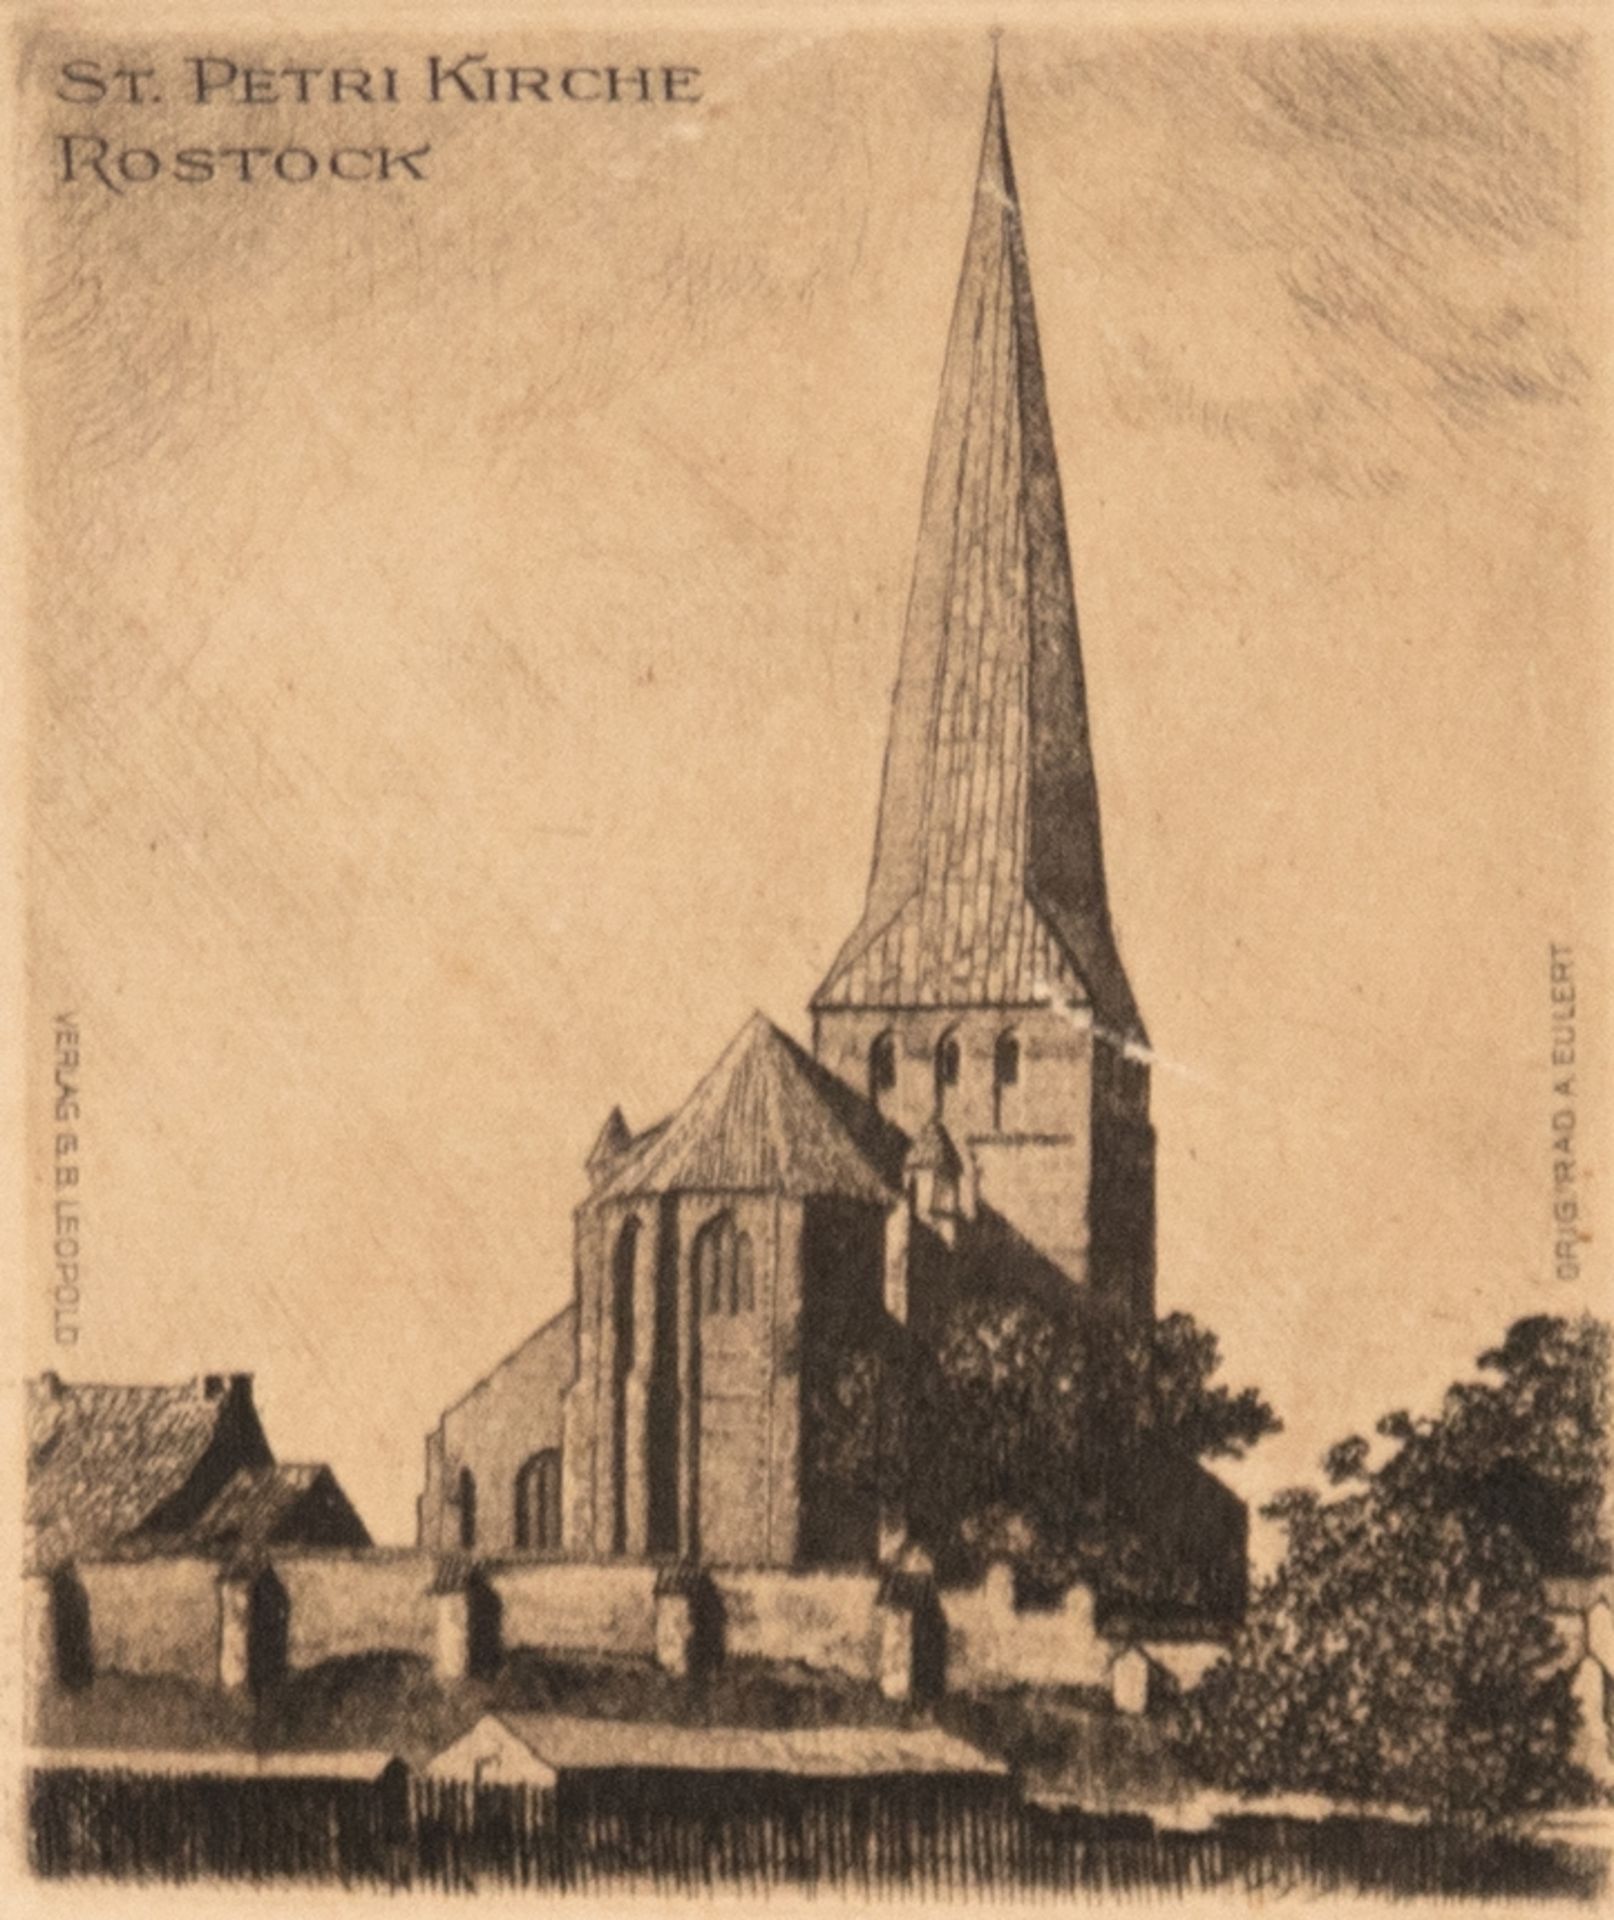 Eulert, Albert (1890 Rostock-1946 Wismar) "St. Petri Kirche- Rostock", Radierung, Verlag G.B. Leop